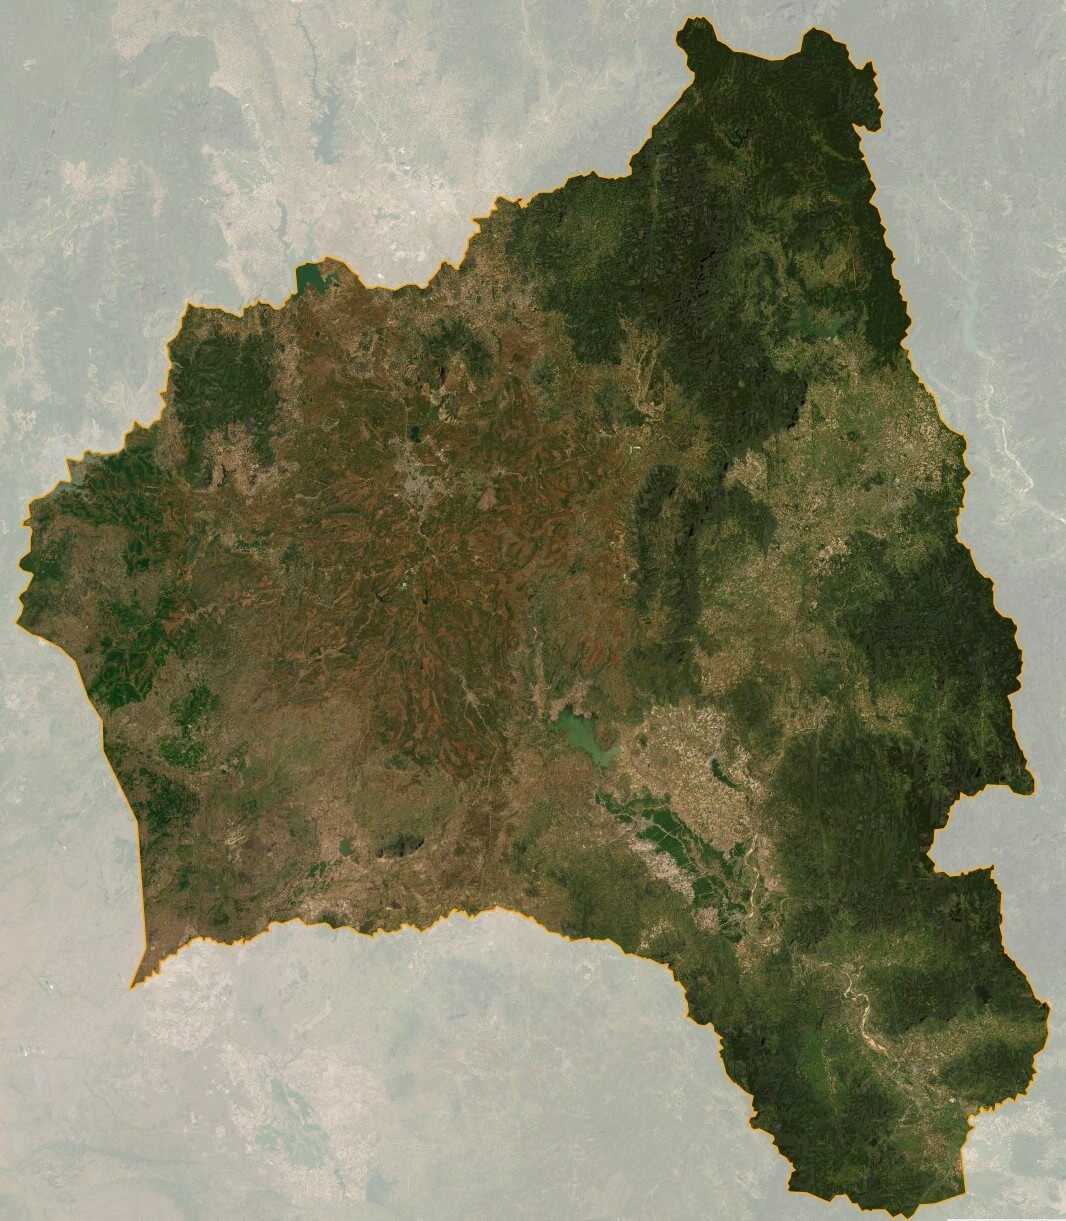 Bản đồ vệ tinh tỉnh Gia Lai